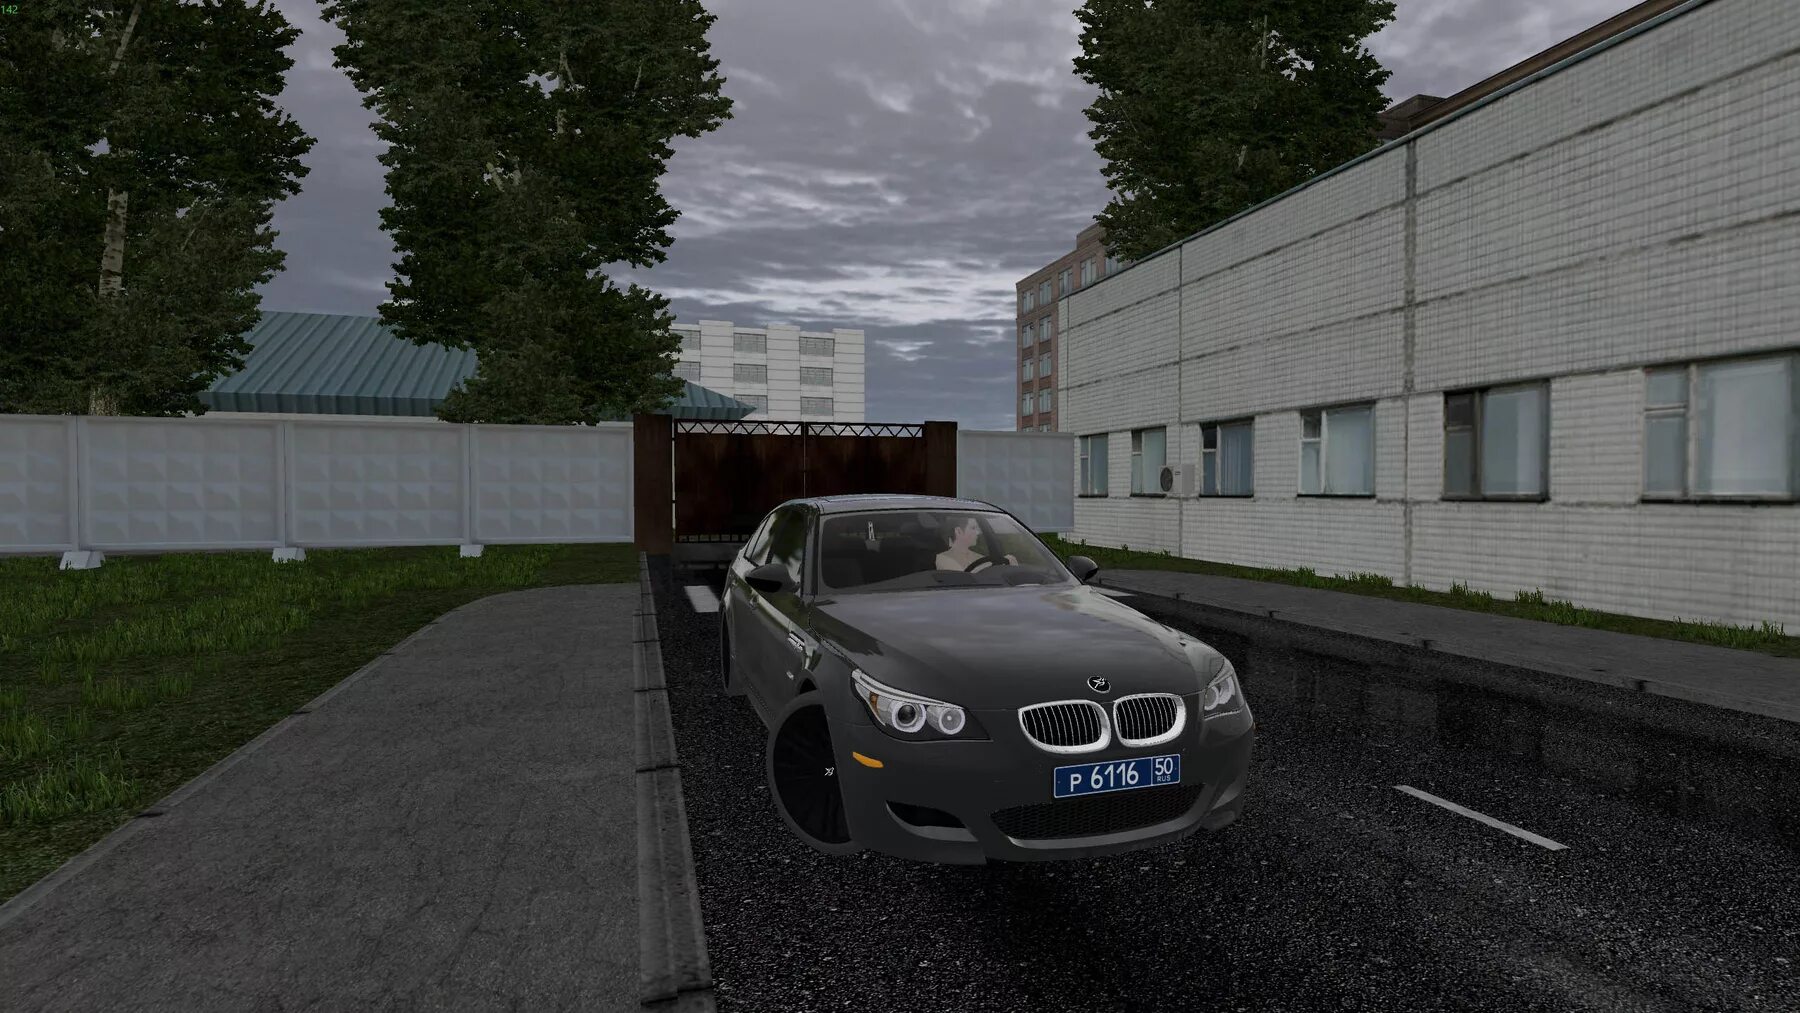 Сити кар драйвинг моды bmw. BMW e60 2006 City car Driving. City car Driving BMW e60. BMW m5 e60 City car Driving. City car Driving: BMW m3 (e46).